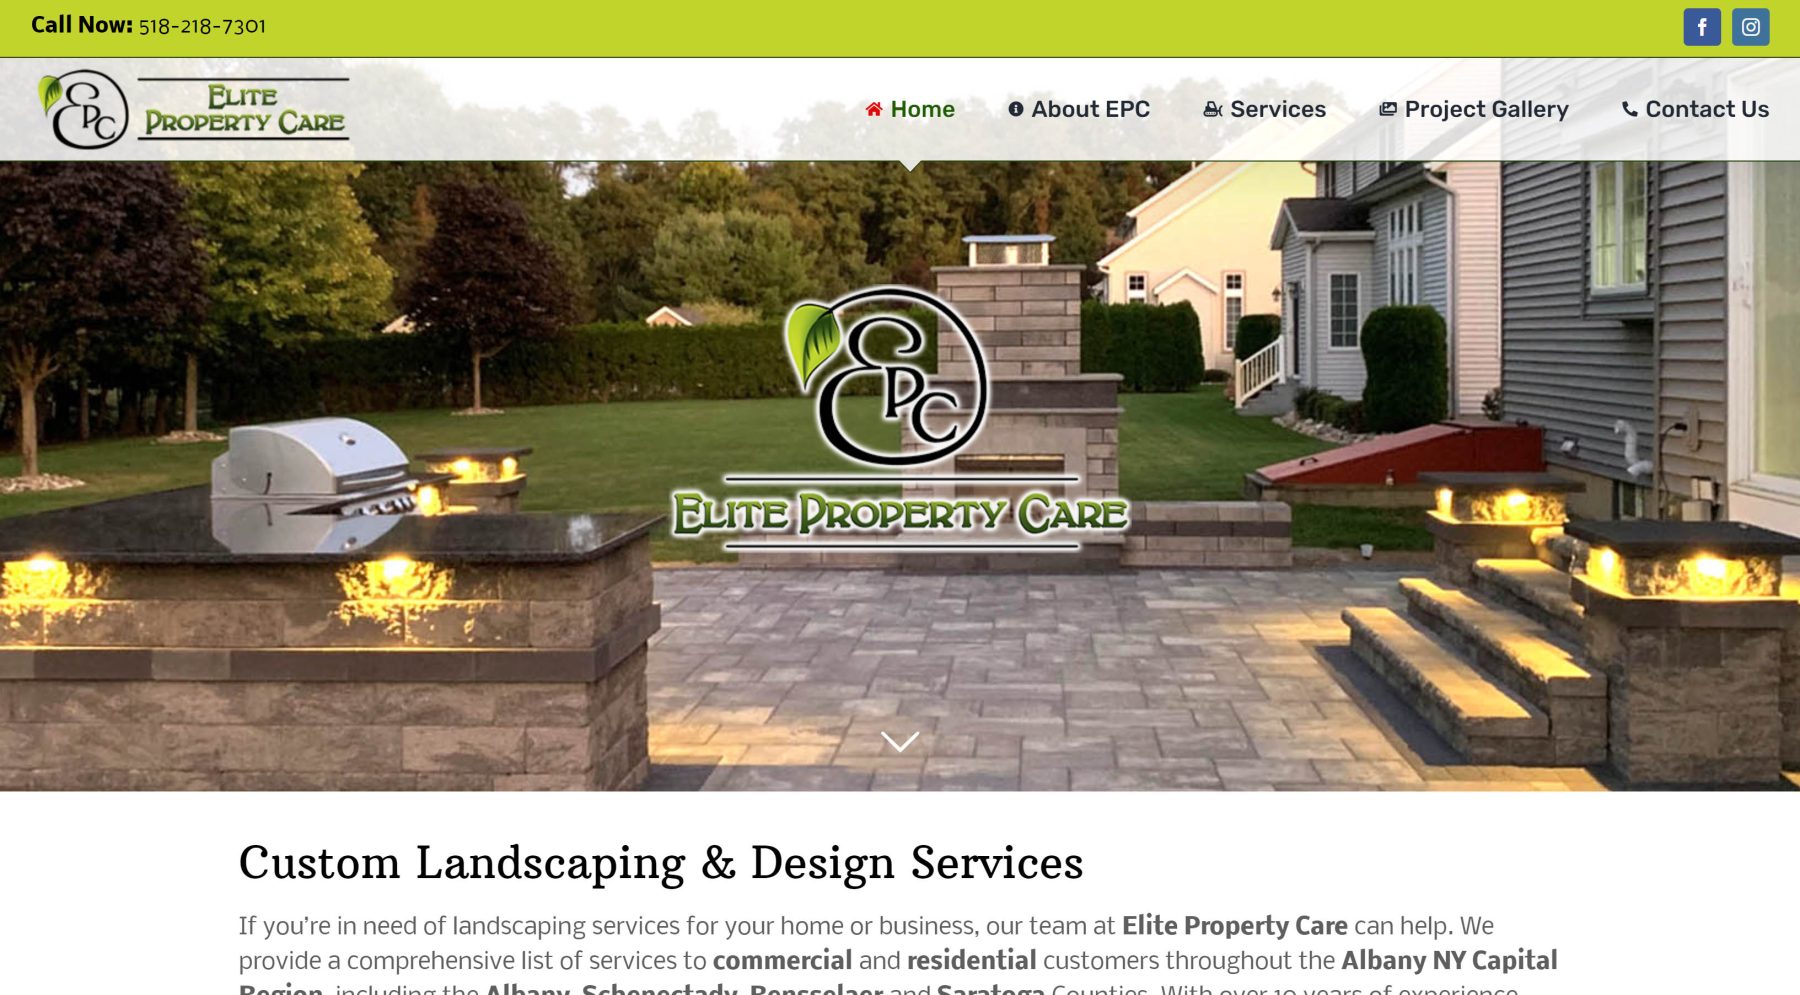 Landscaping Service Website Design PPC Google Ads Marketing